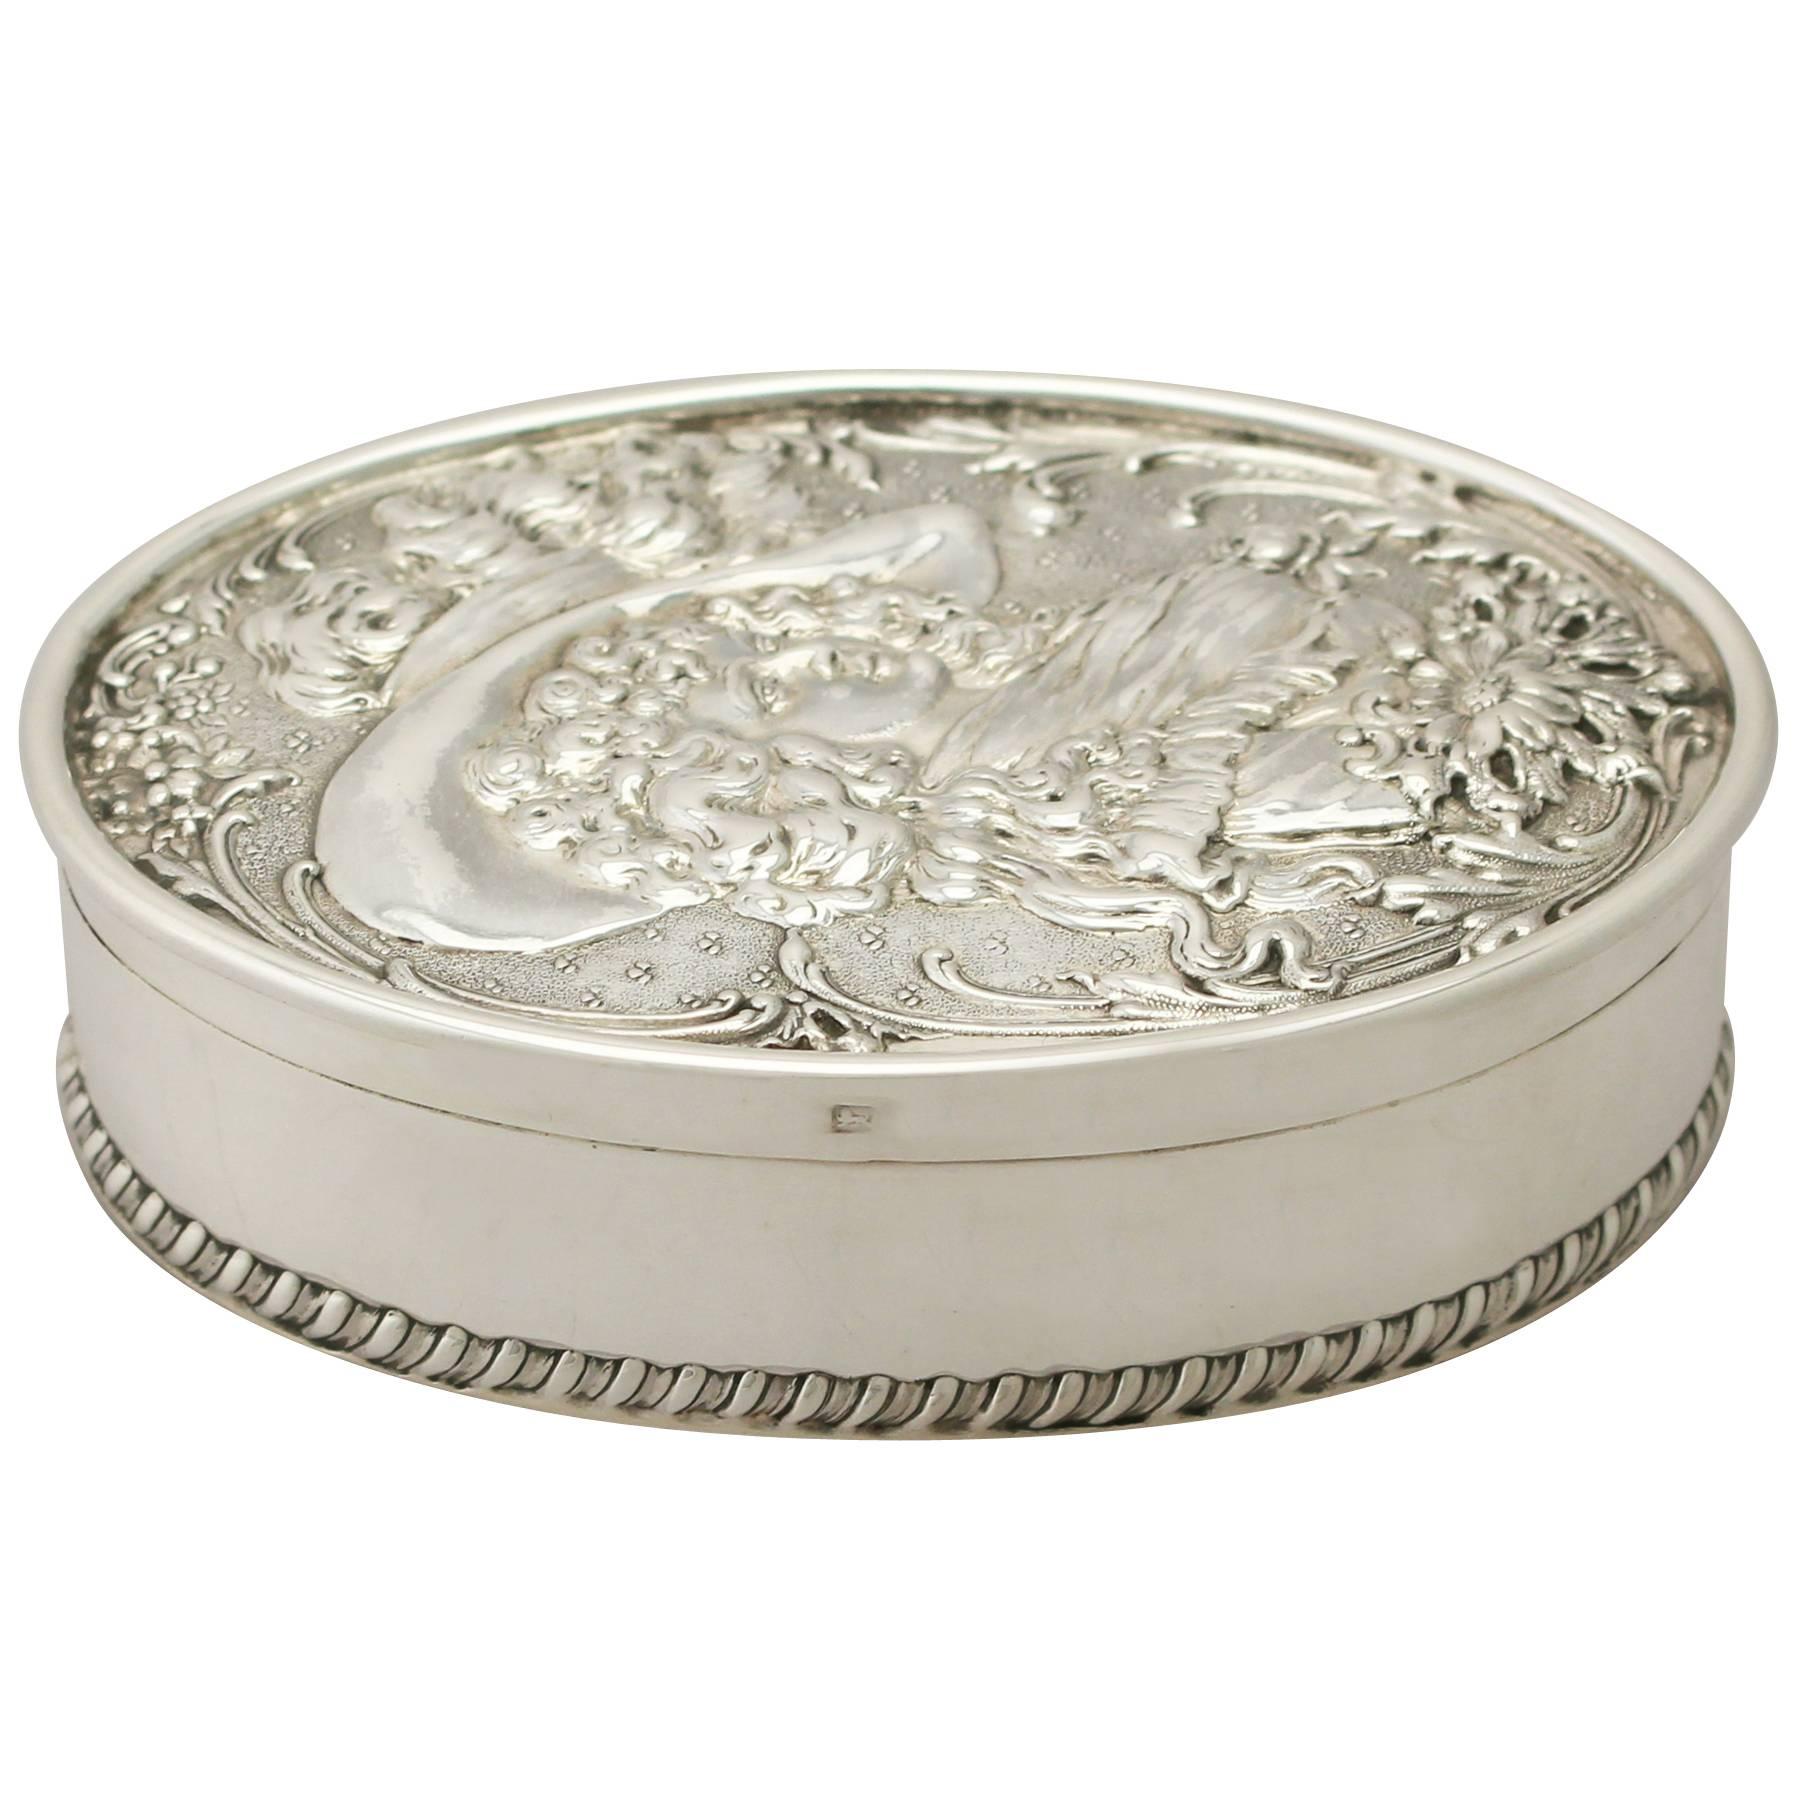 Sterling Silver Jewelry/Trinket Box, Art Nouveau Style, Antique Edwardian